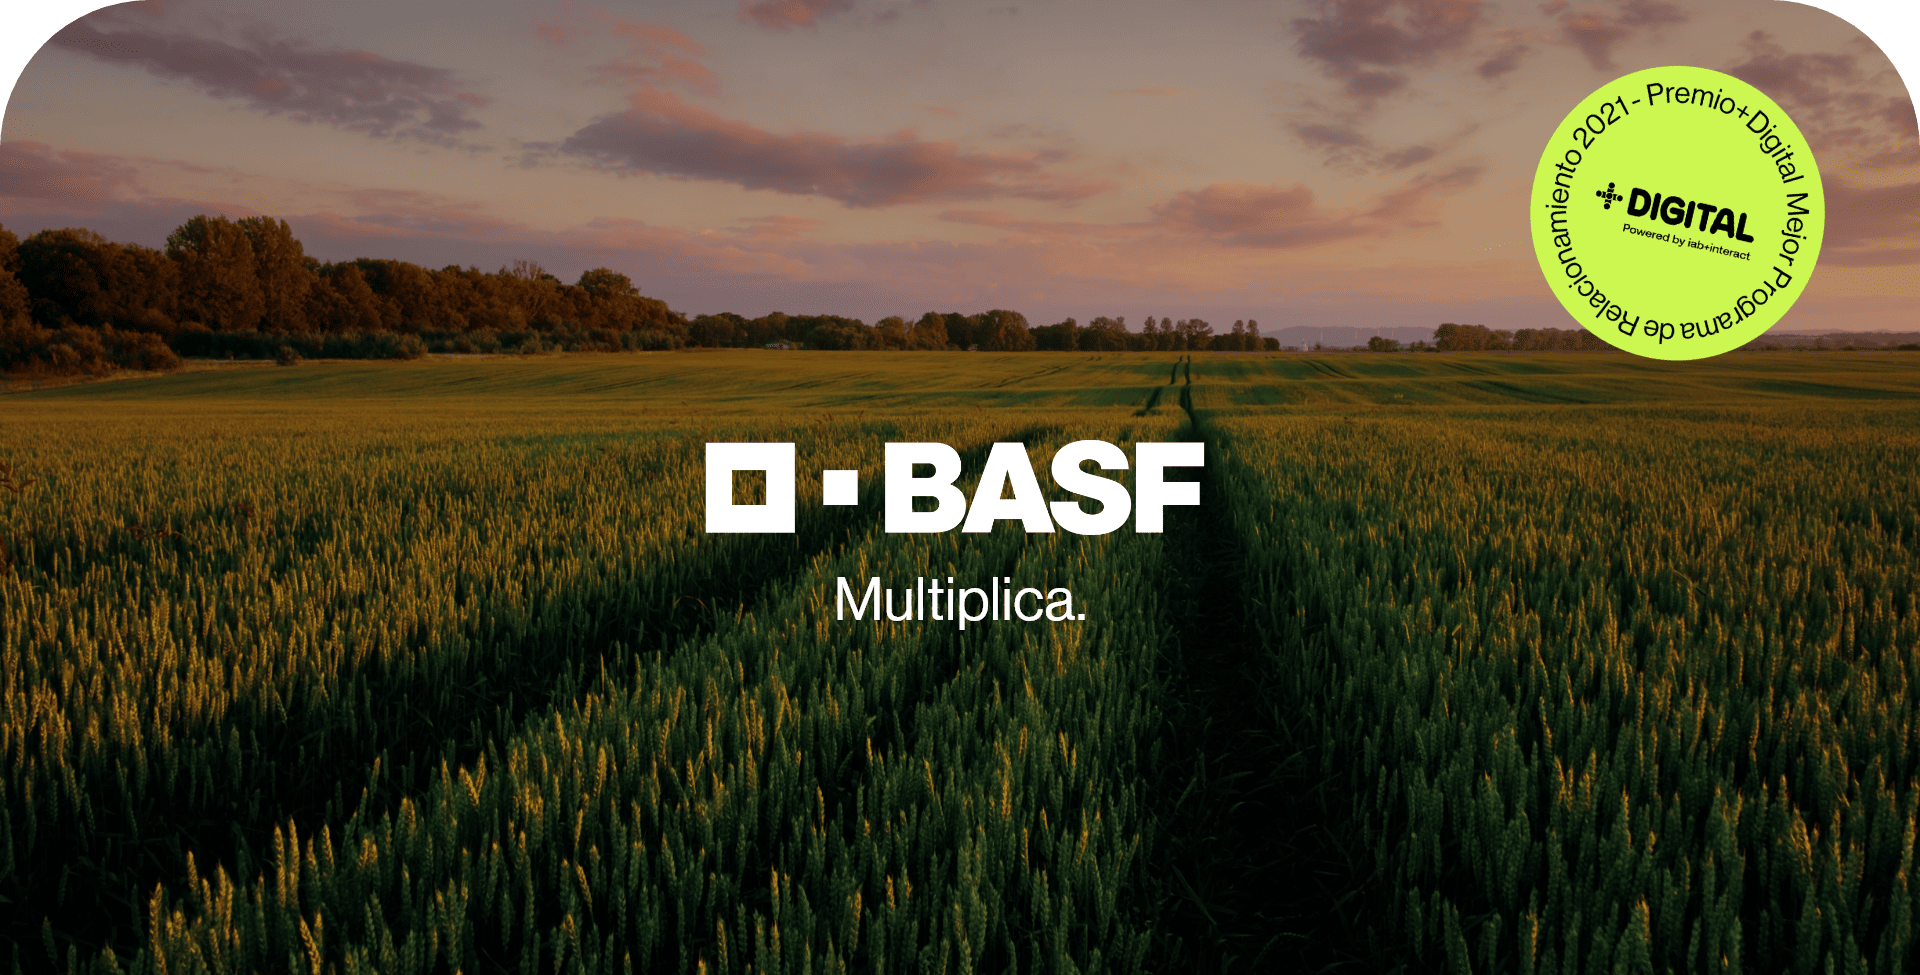 PRyecto BASF